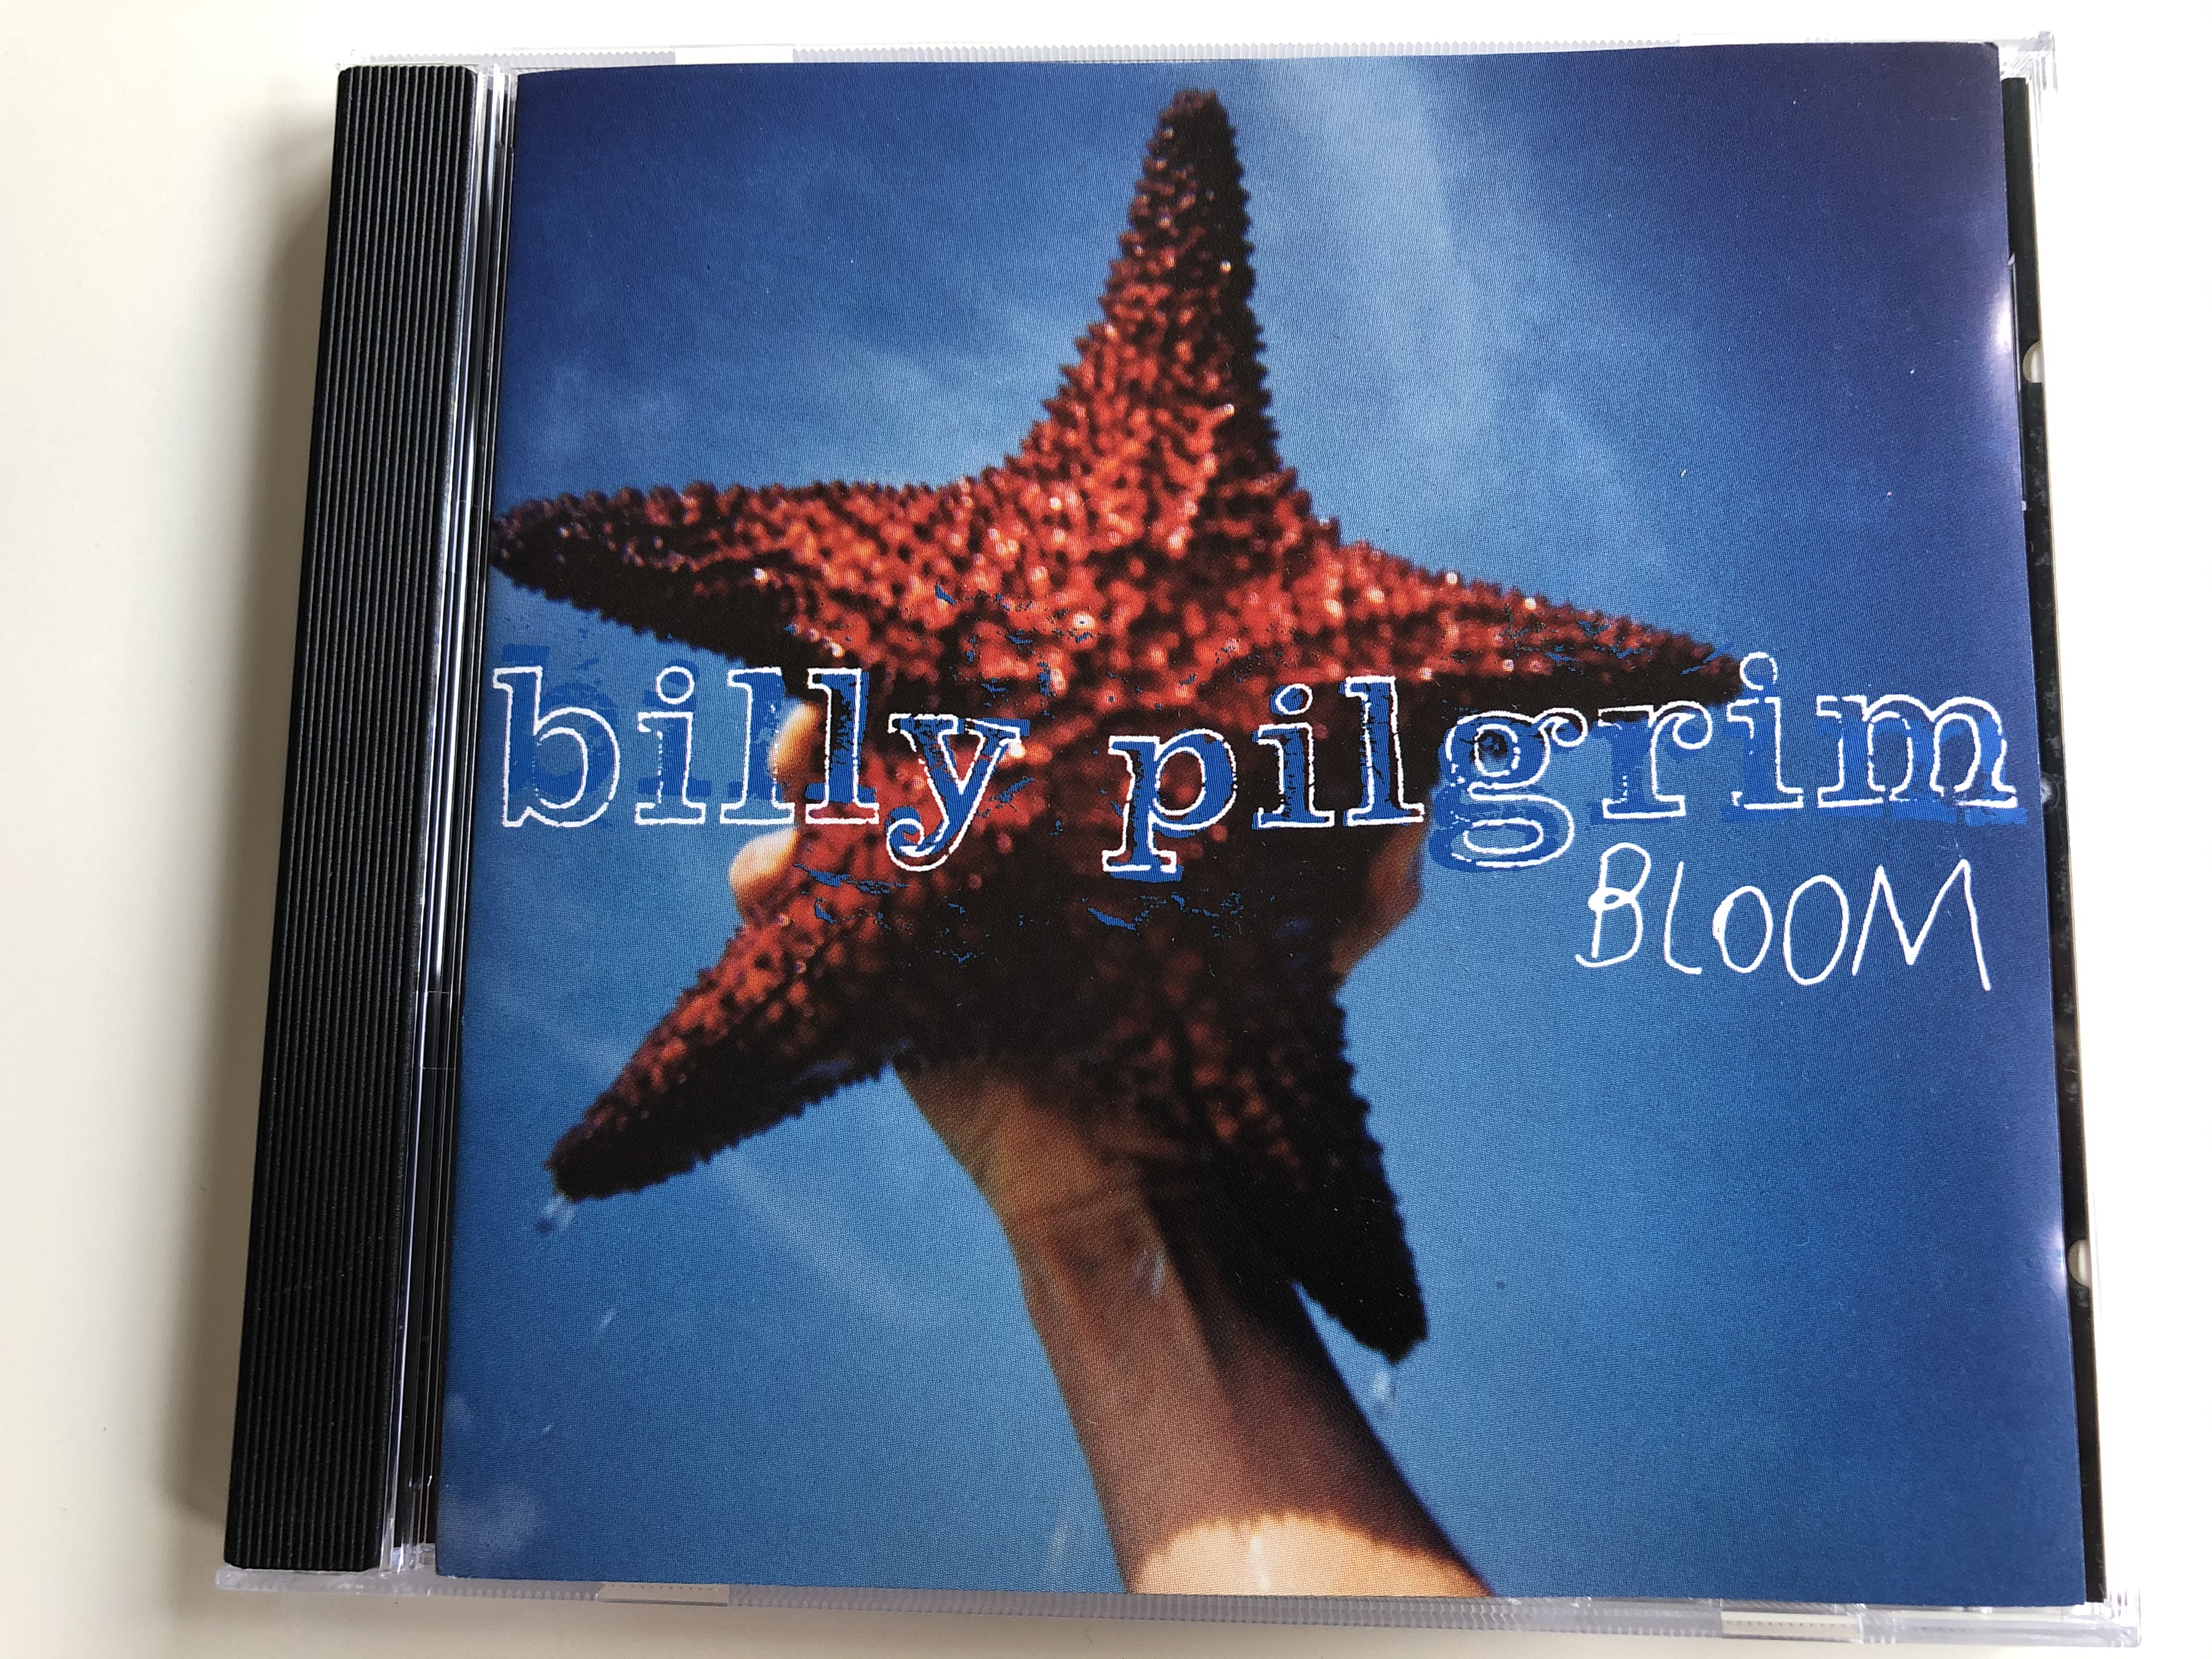 billy-pilgrim-bloom-atlantic-audio-cd-1995-7567-82751-2-1-.jpg